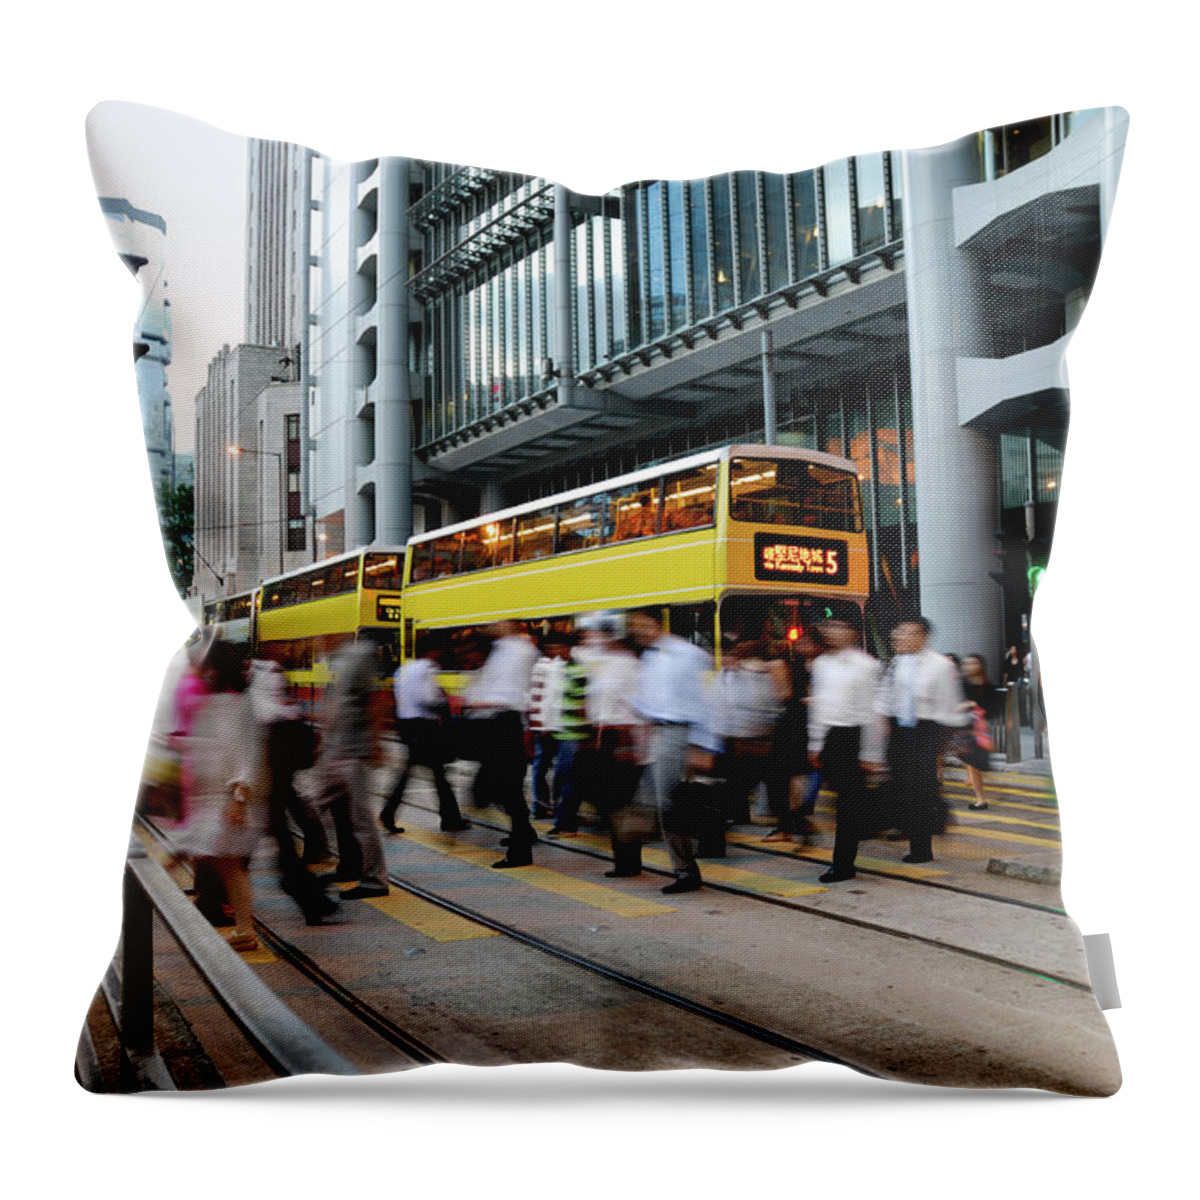 Working Throw Pillow featuring the photograph City Life Hong Kong by Samxmeg